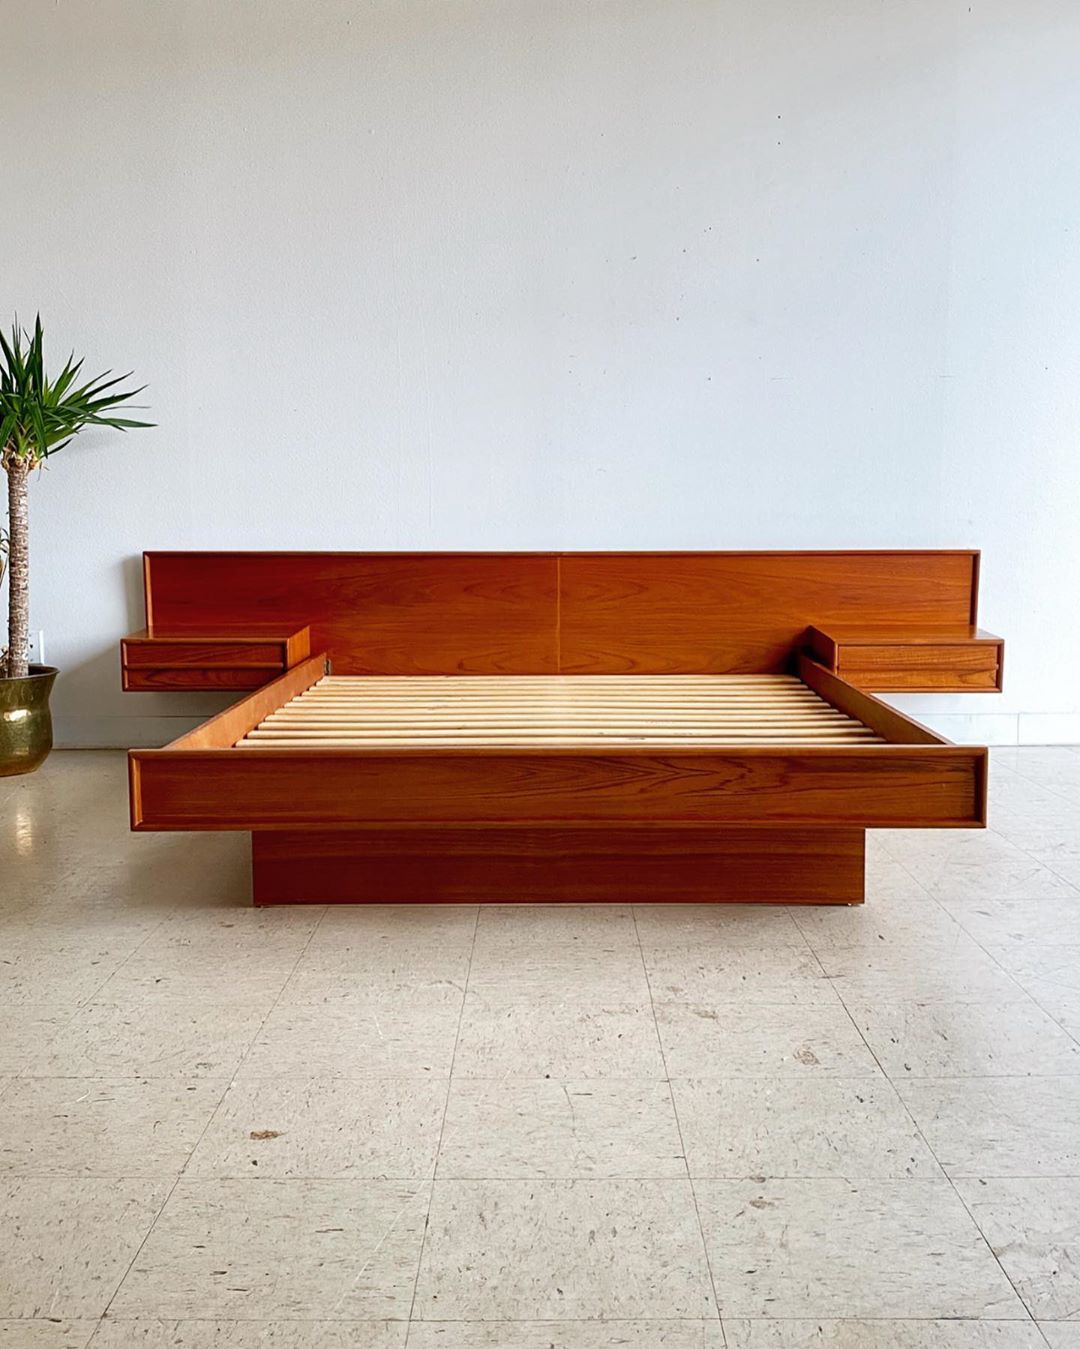 Create a Stylish Sanctuary with Sleek
Platform Bed Designs